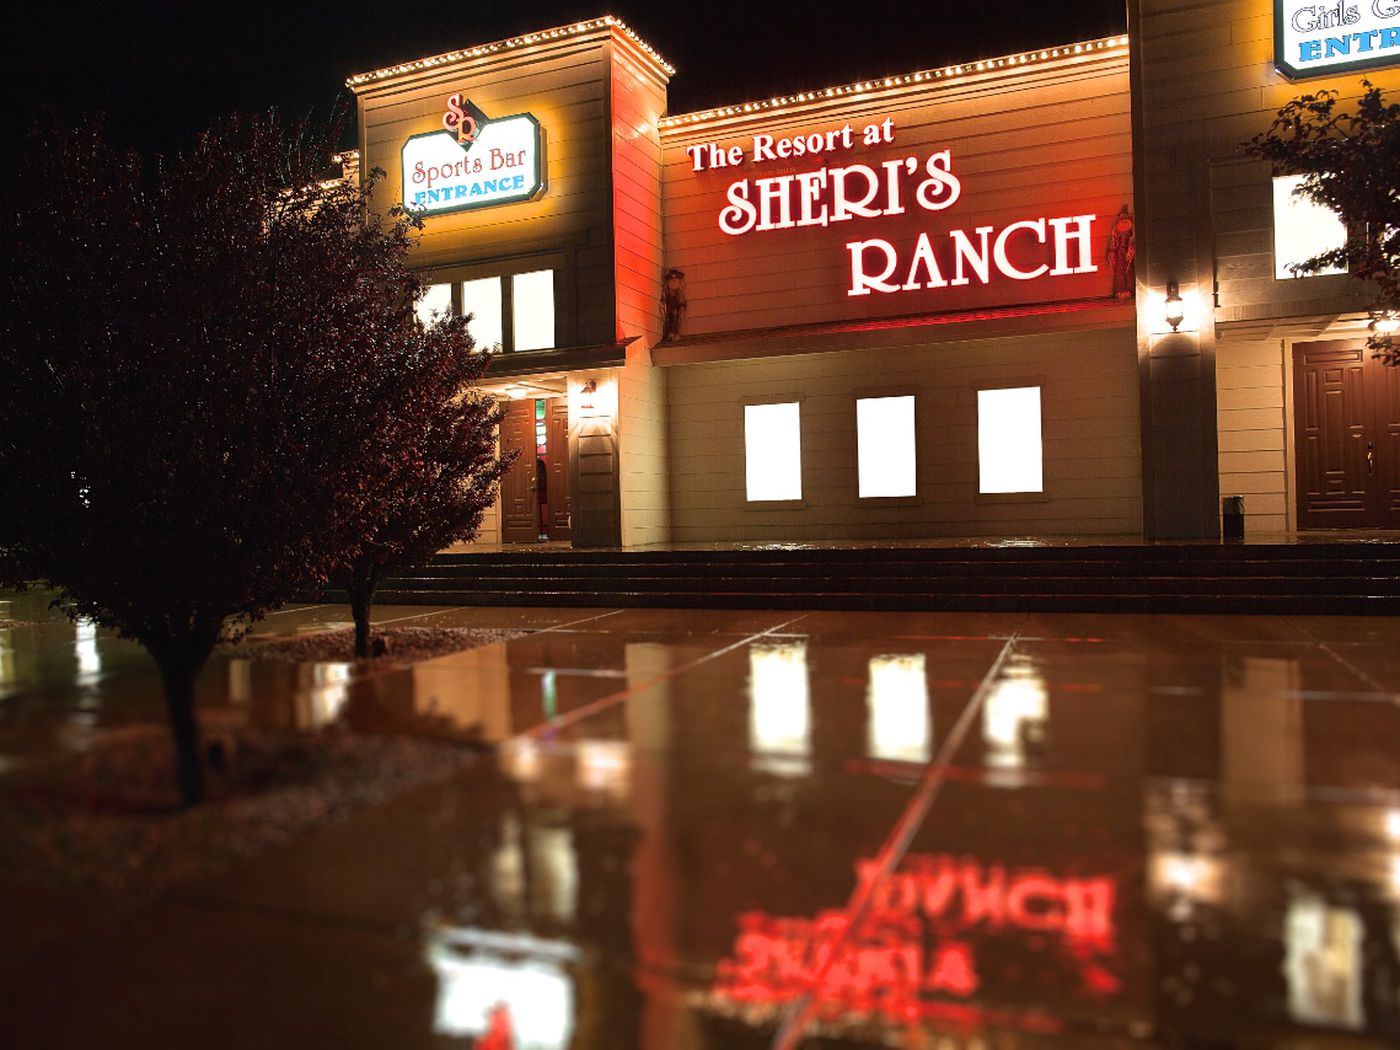 Sheris Ranch, the Best Legal Brothel Near Las Vegas